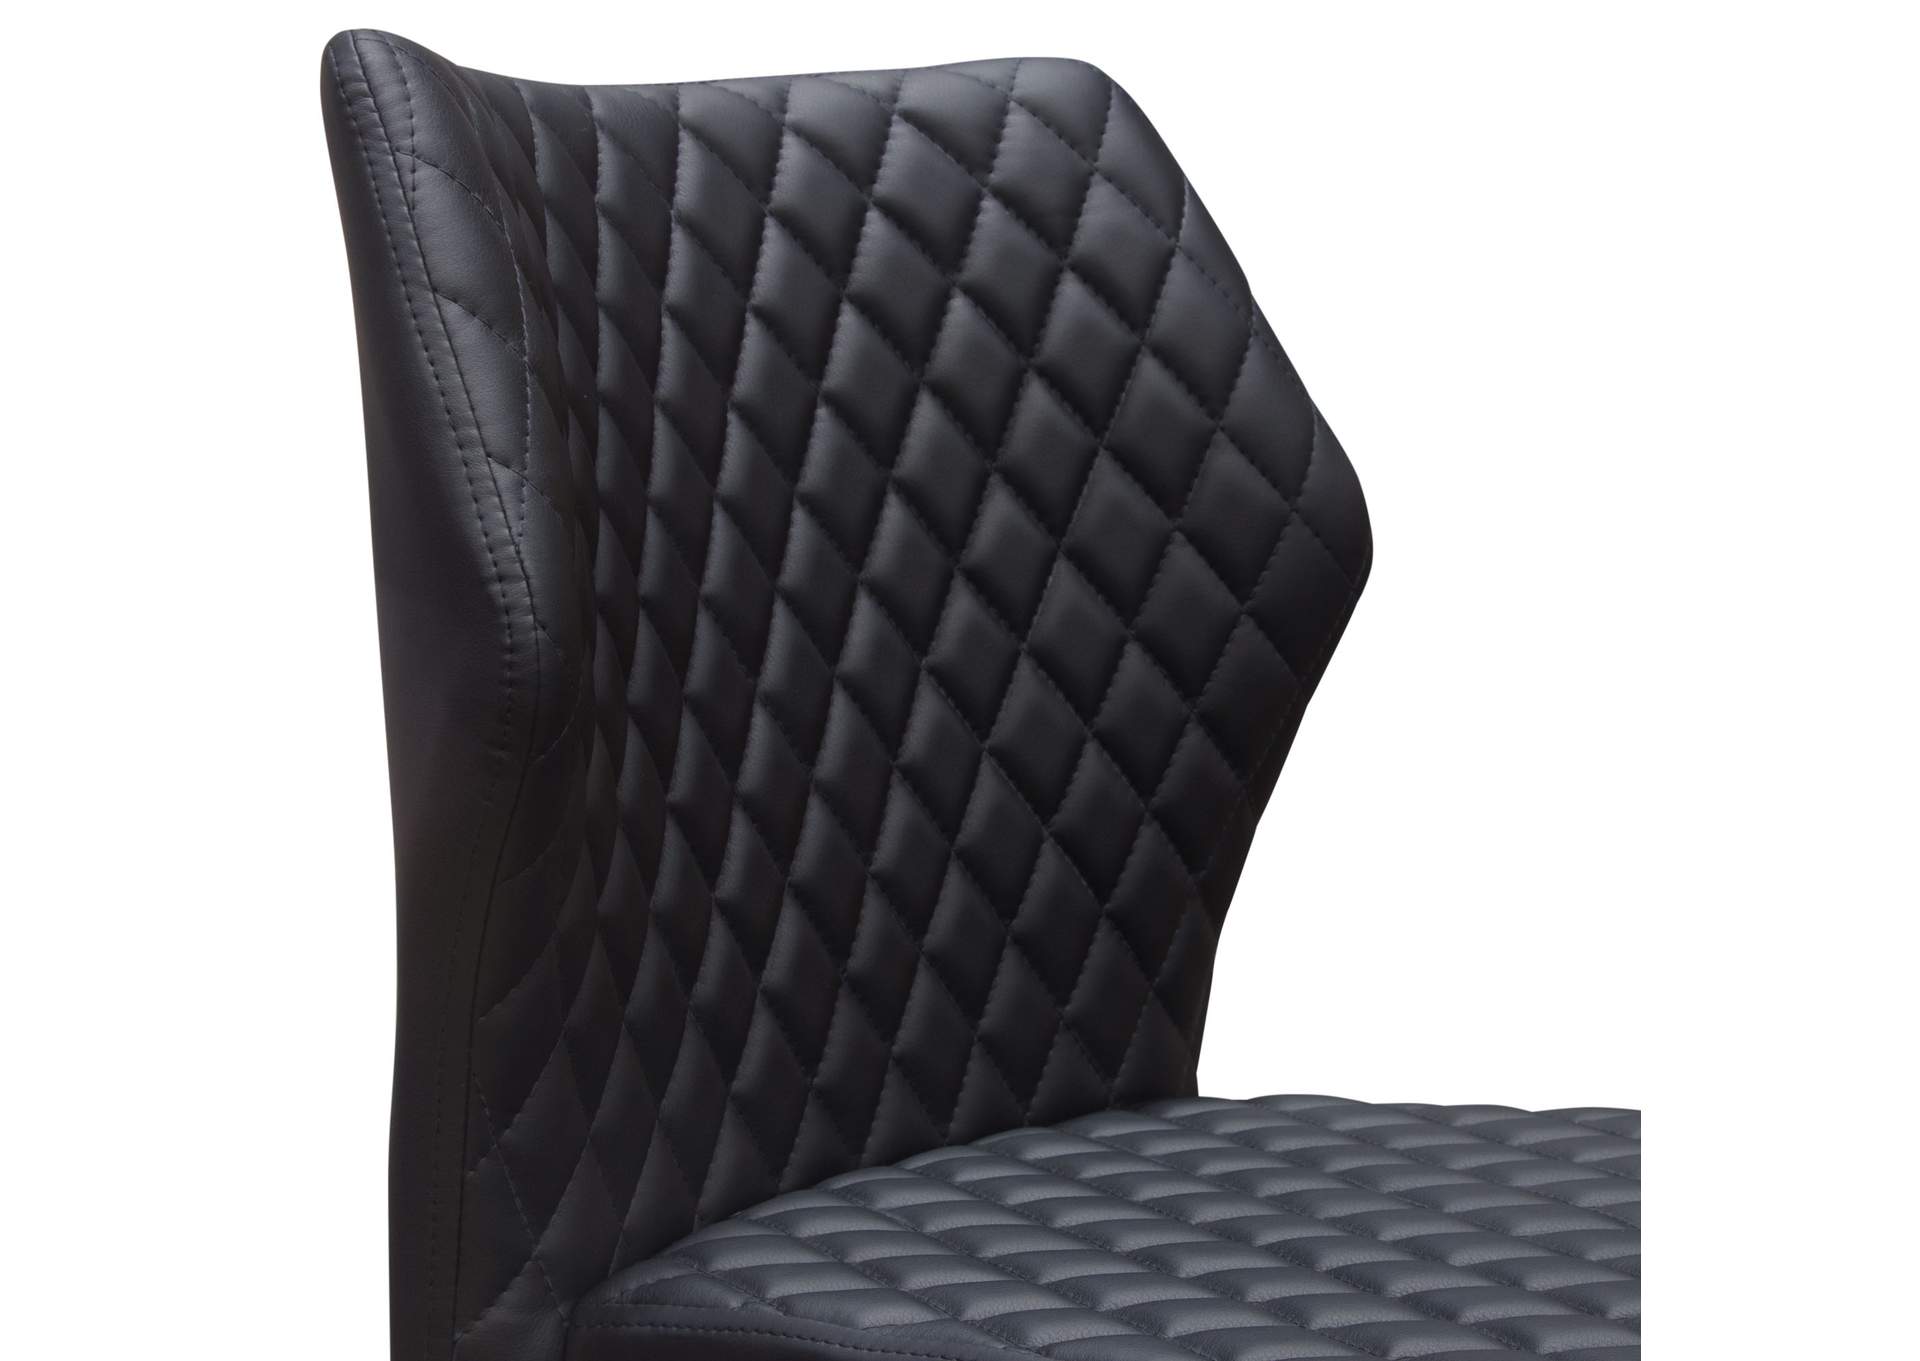 Milo 4-Pack Dining Chairs in Black Diamond Tufted Leatherette with Black Powder Coat Legs by Diamond Sofa,Diamond Sofa